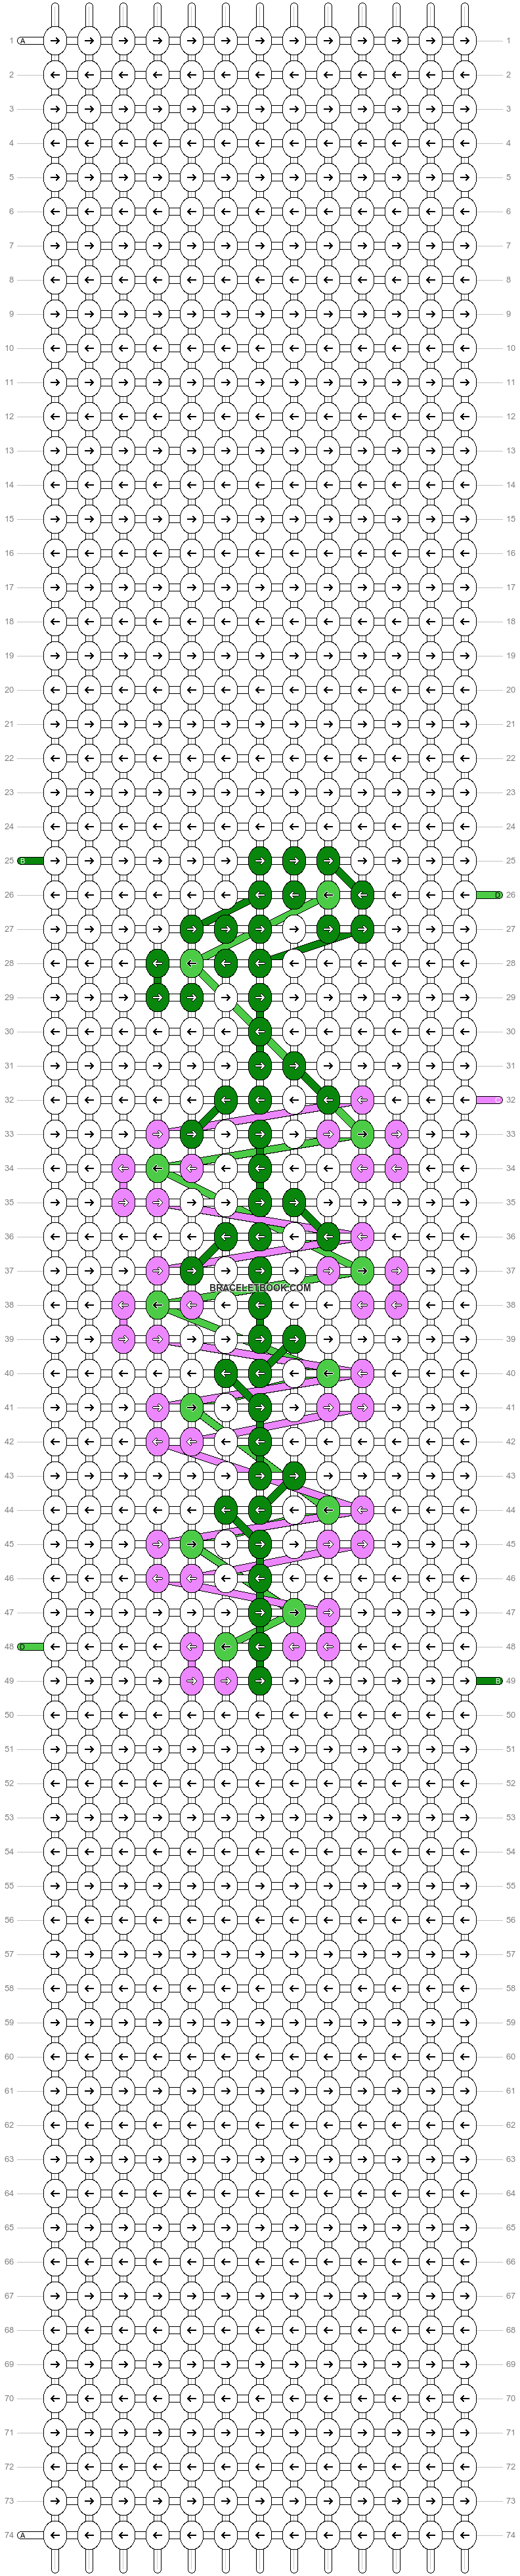 Alpha pattern #36712 variation #37513 pattern